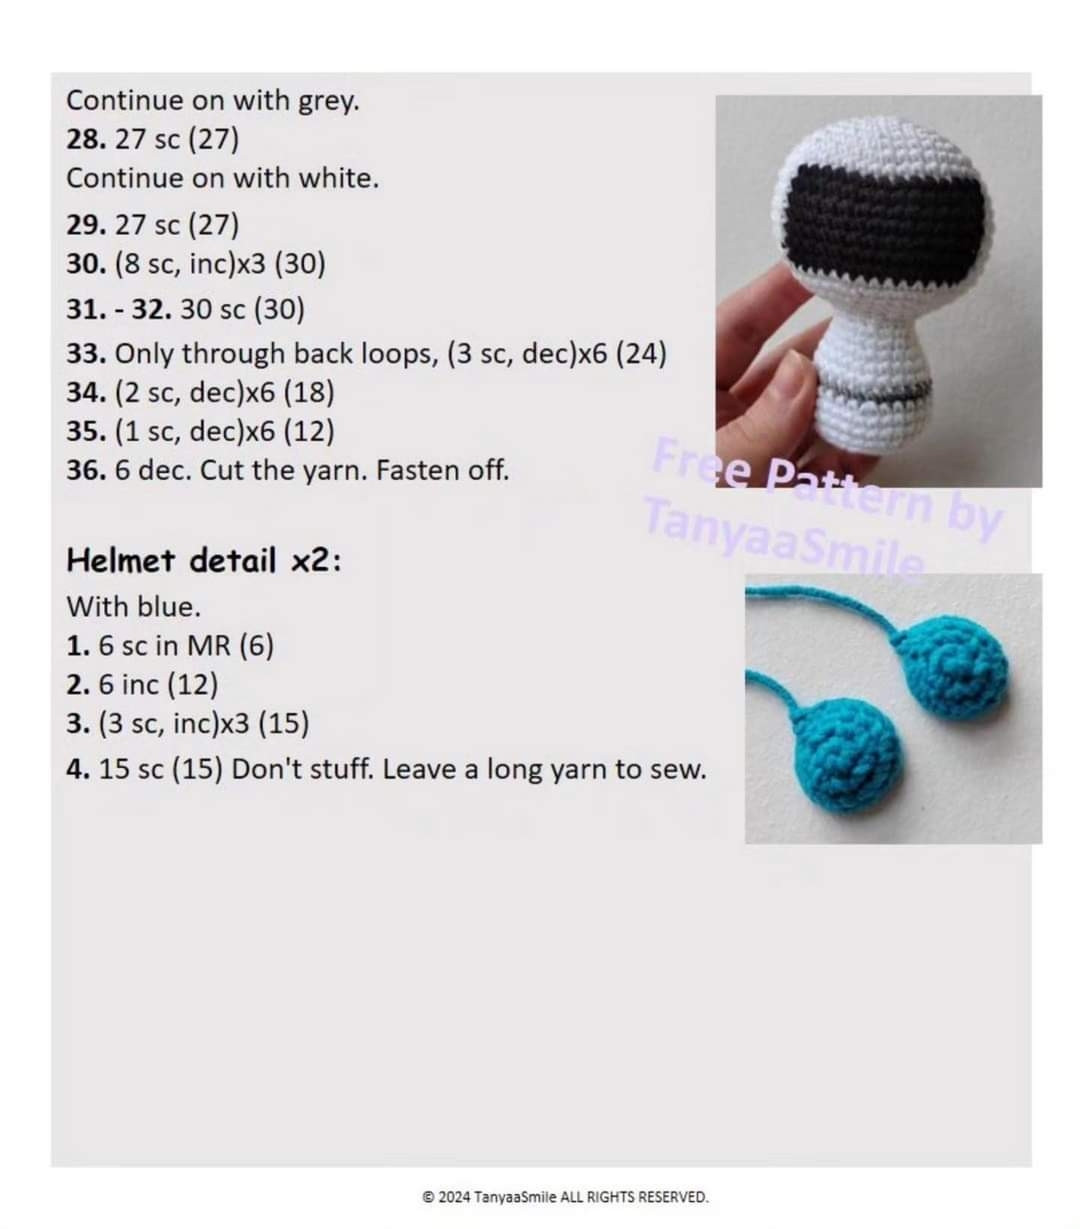 Crochet pattern for spacesuit